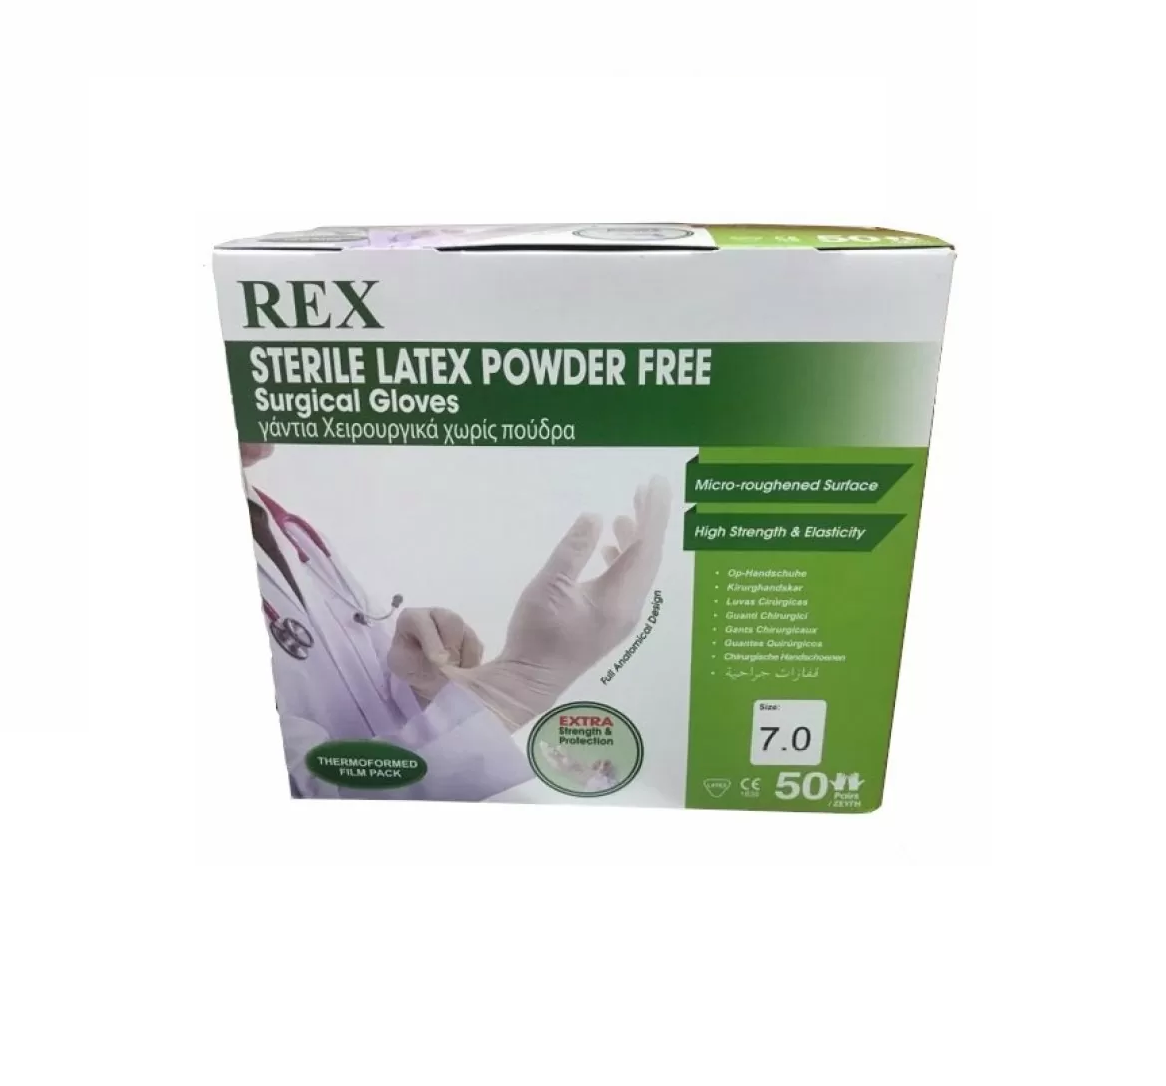 REX Γάντια αποστειρωμένα χωρίς πούδρα RXSTNP75 7.5 - 50 ζεύγη